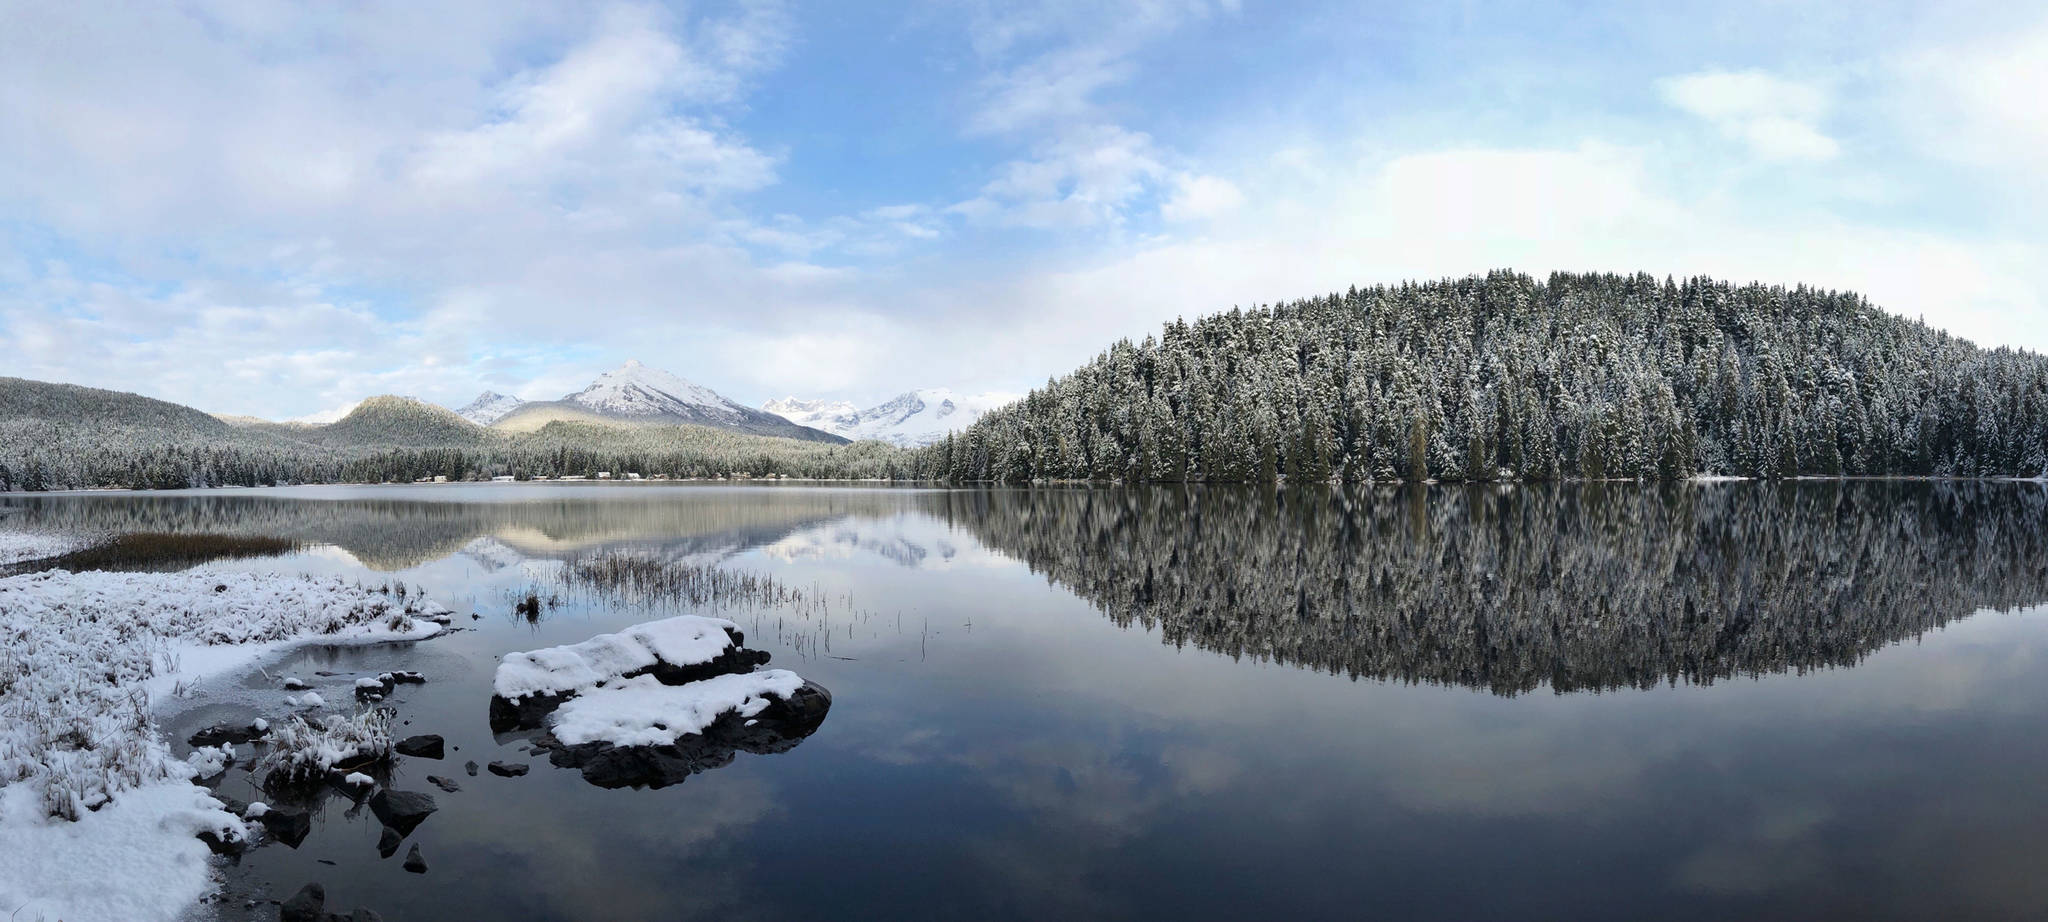 The landscape reflects in Auke Lake on Saturday, Nov. 11, 2017. (Angelo Saggiomo | Juneau Empire)